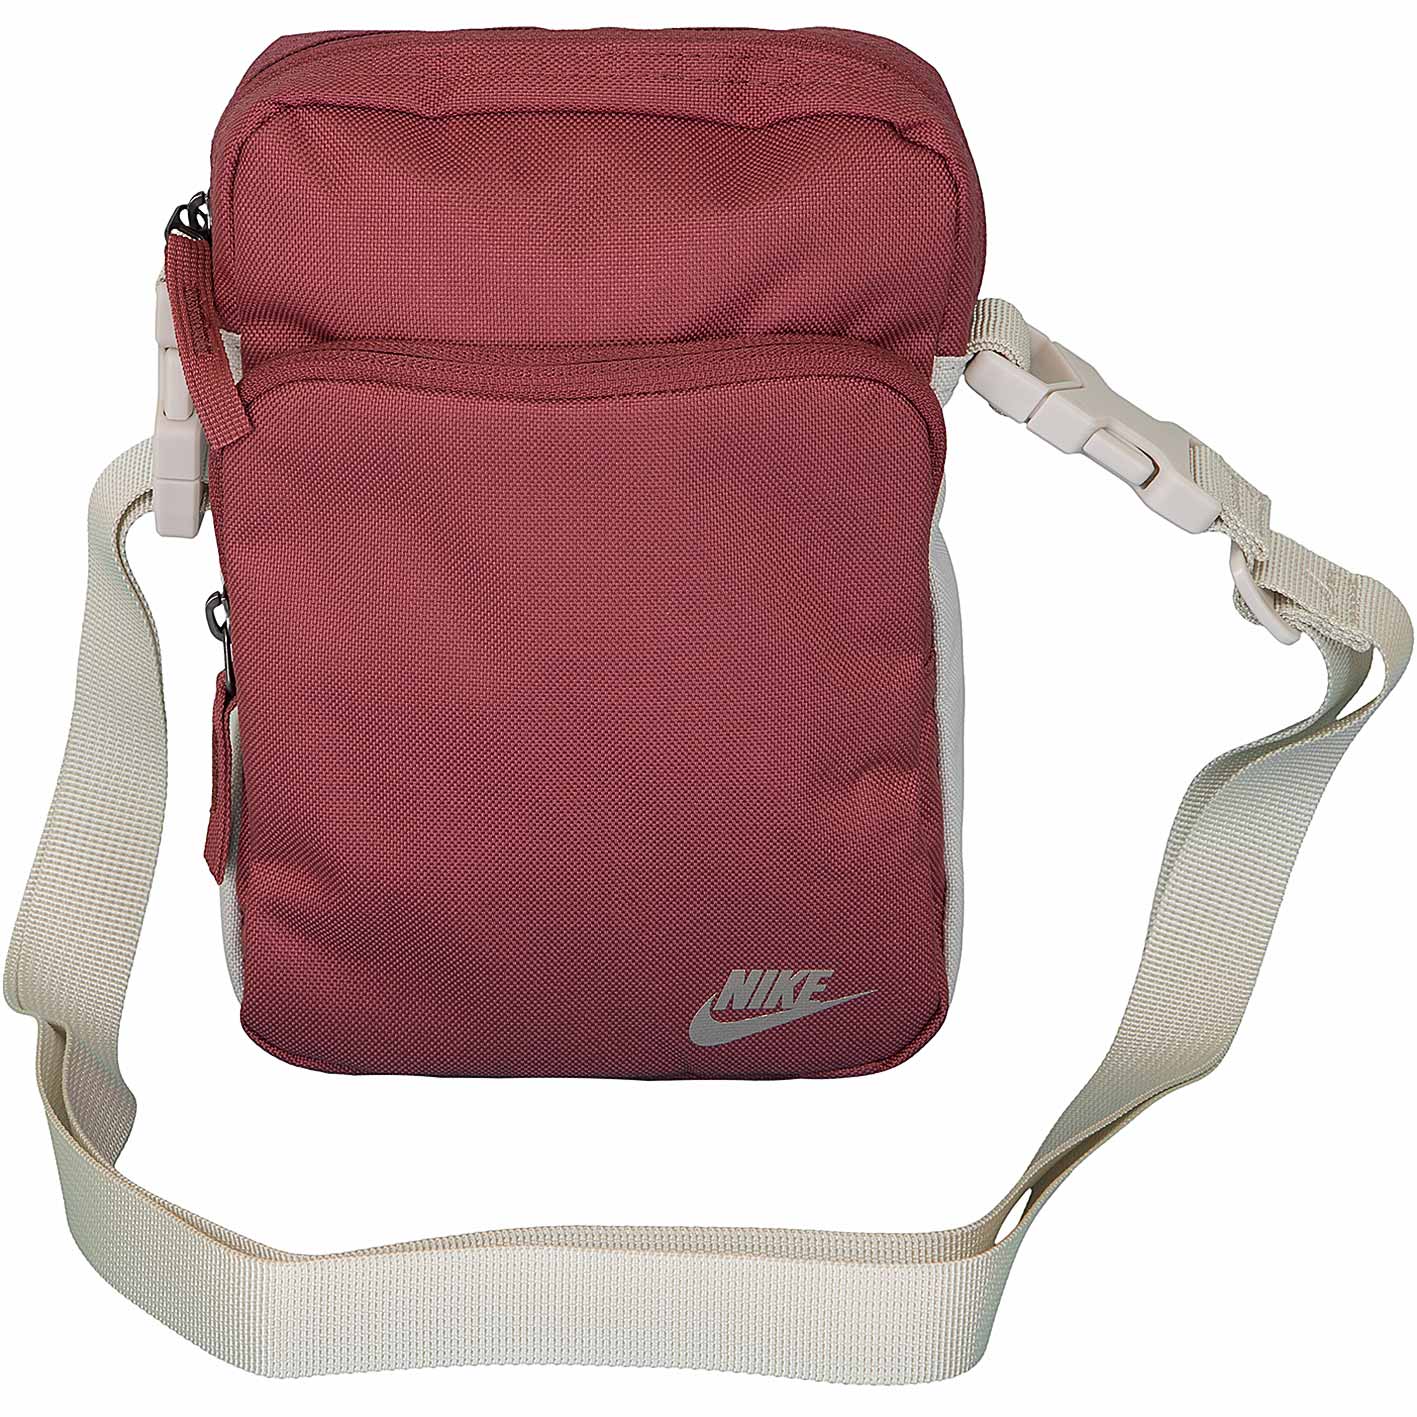 ☆ Nike Mini Tasche Heritage 2.0 rot/beige - hier bestellen!